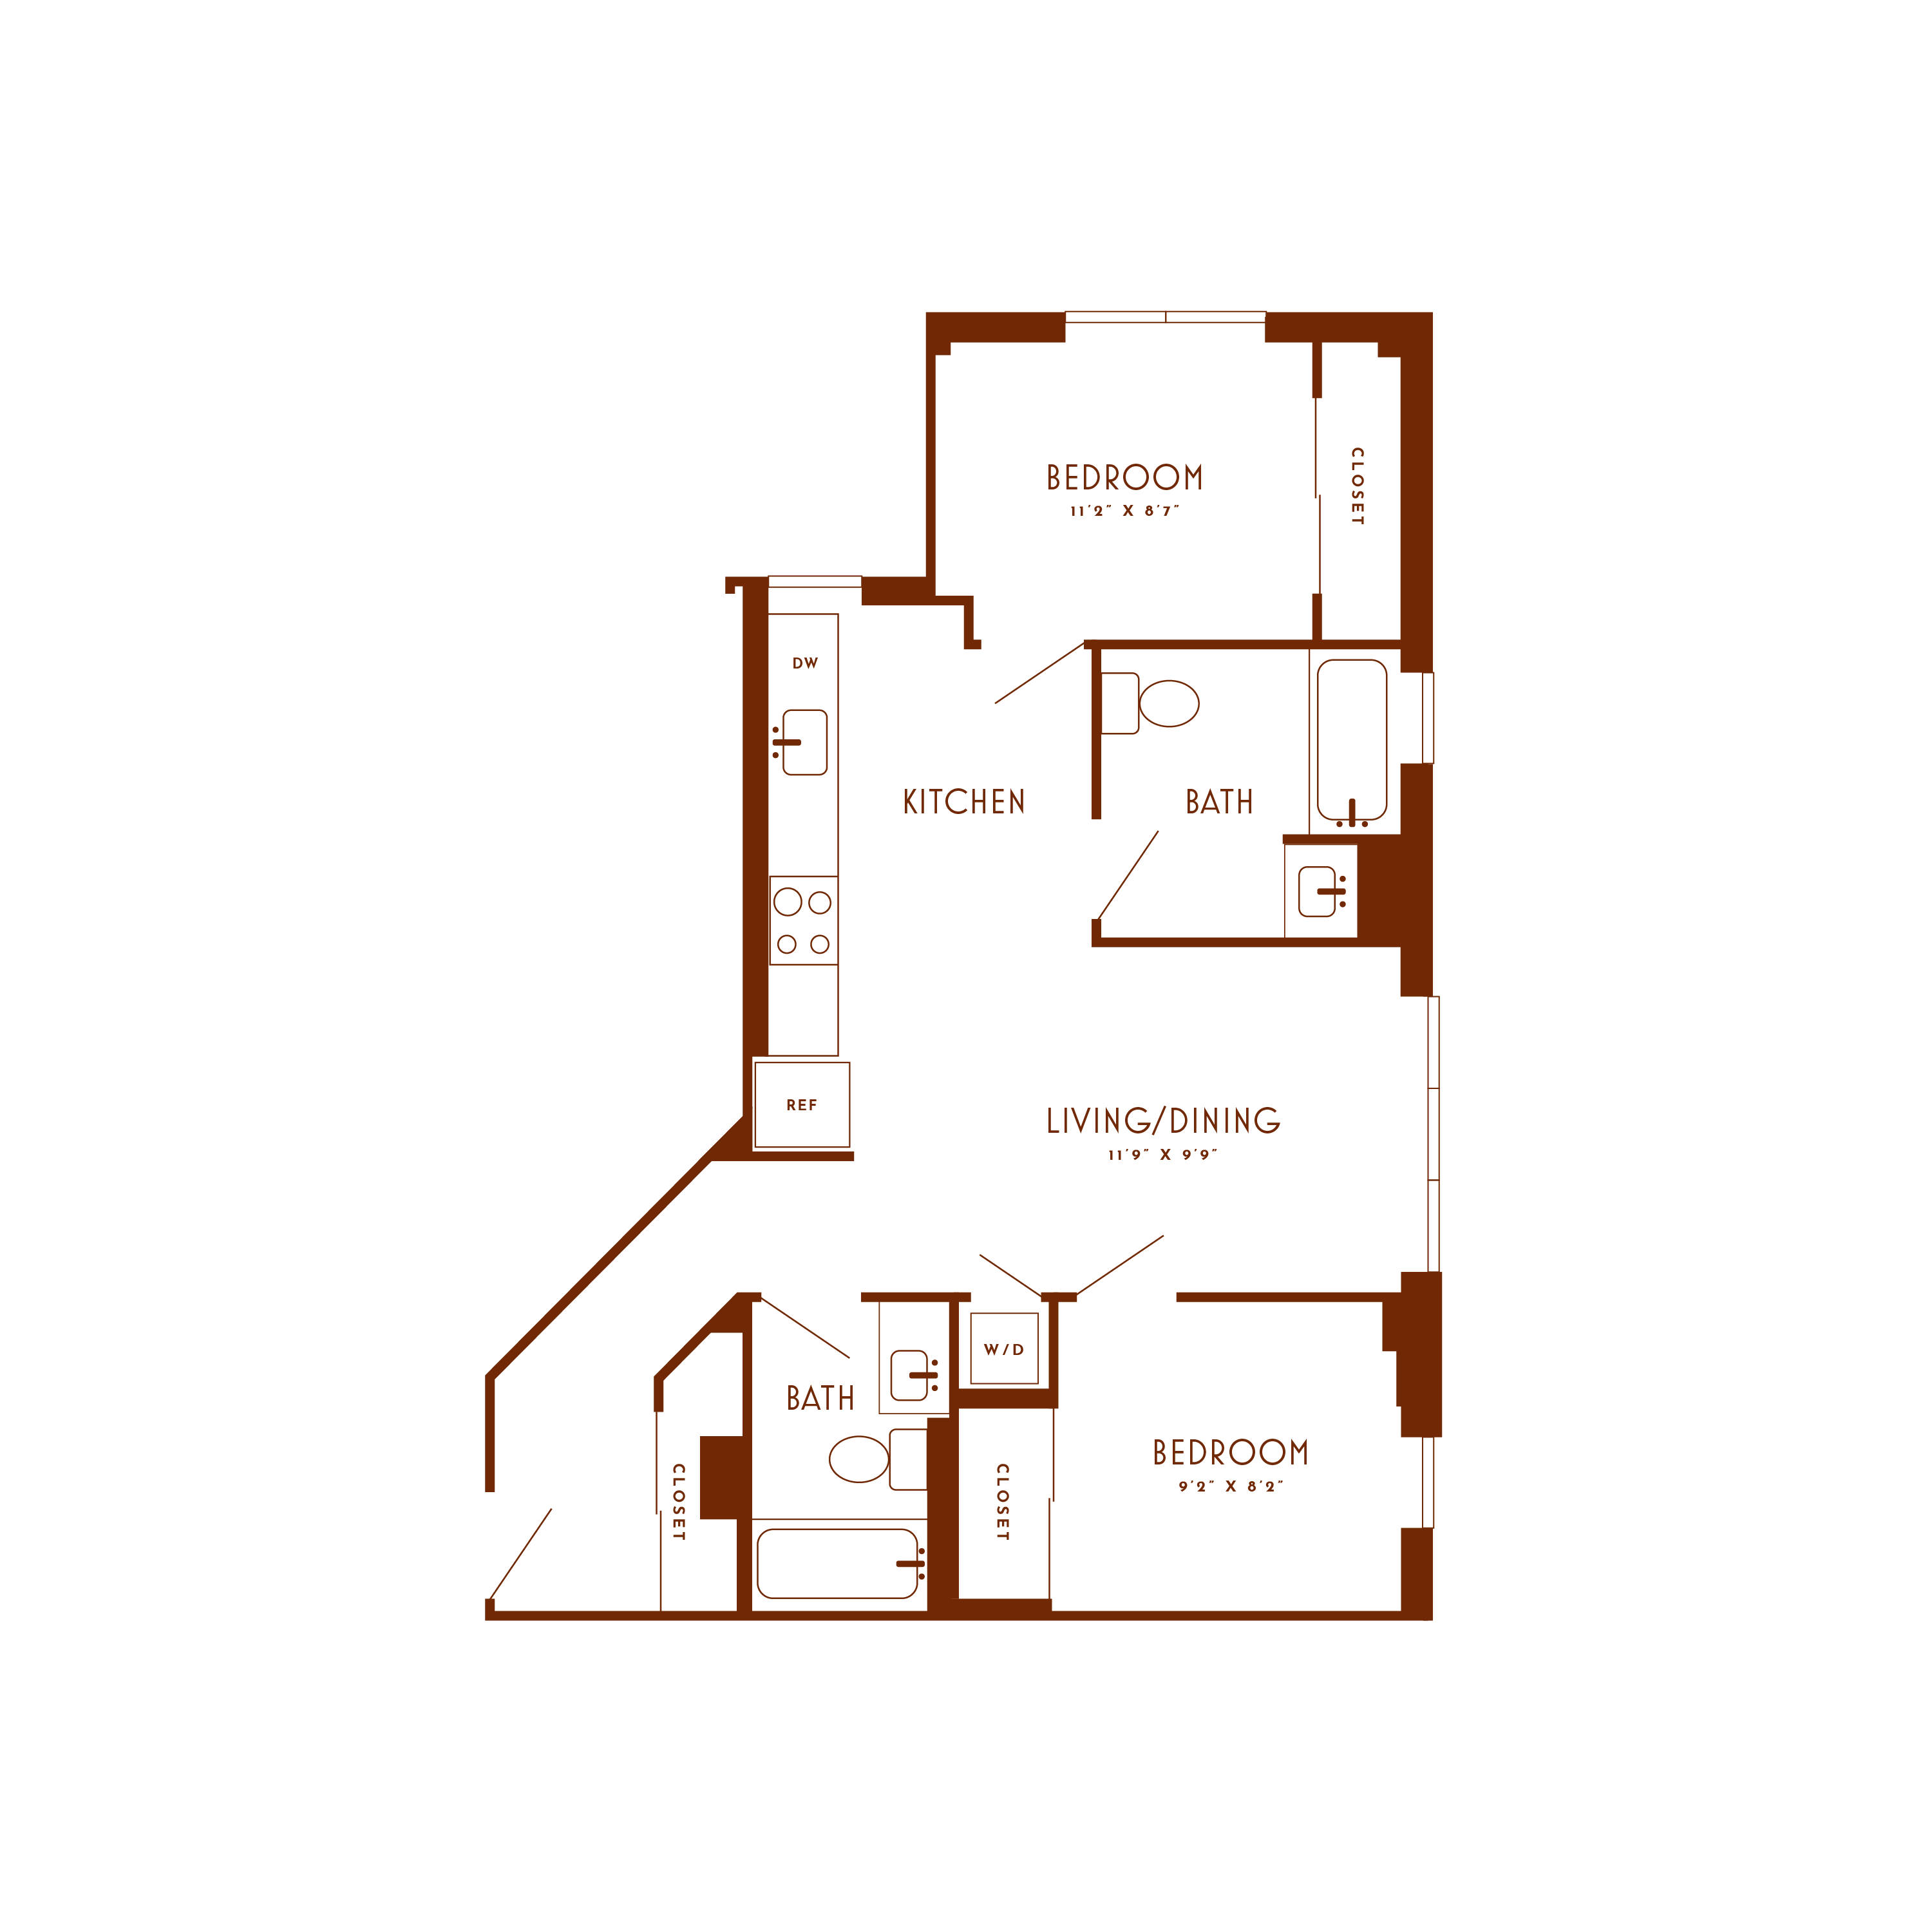 Floor plan image of unit 519